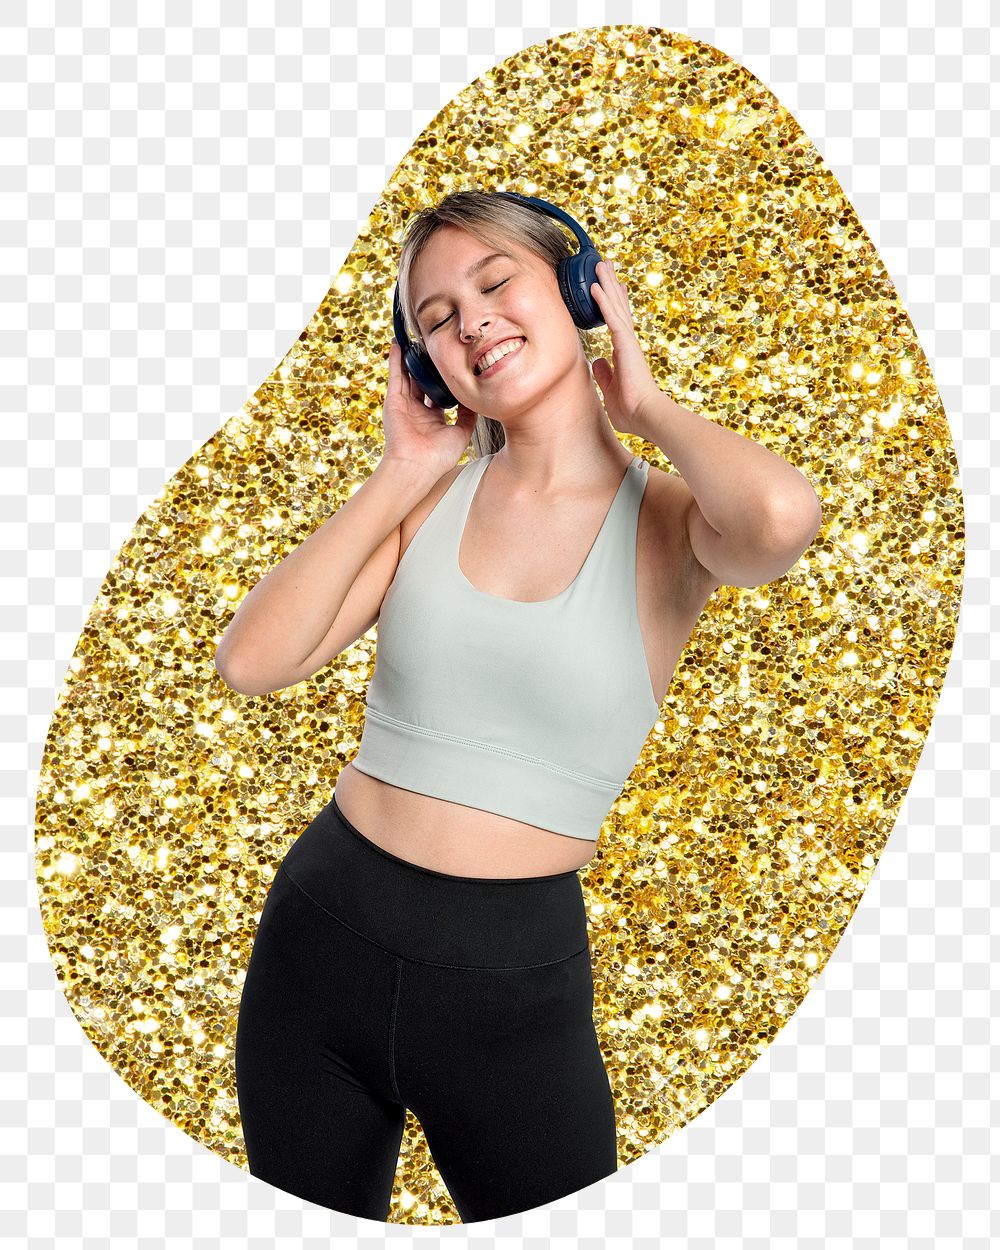 Png woman enjoying music sticker, gold glitter blob shape, transparent background